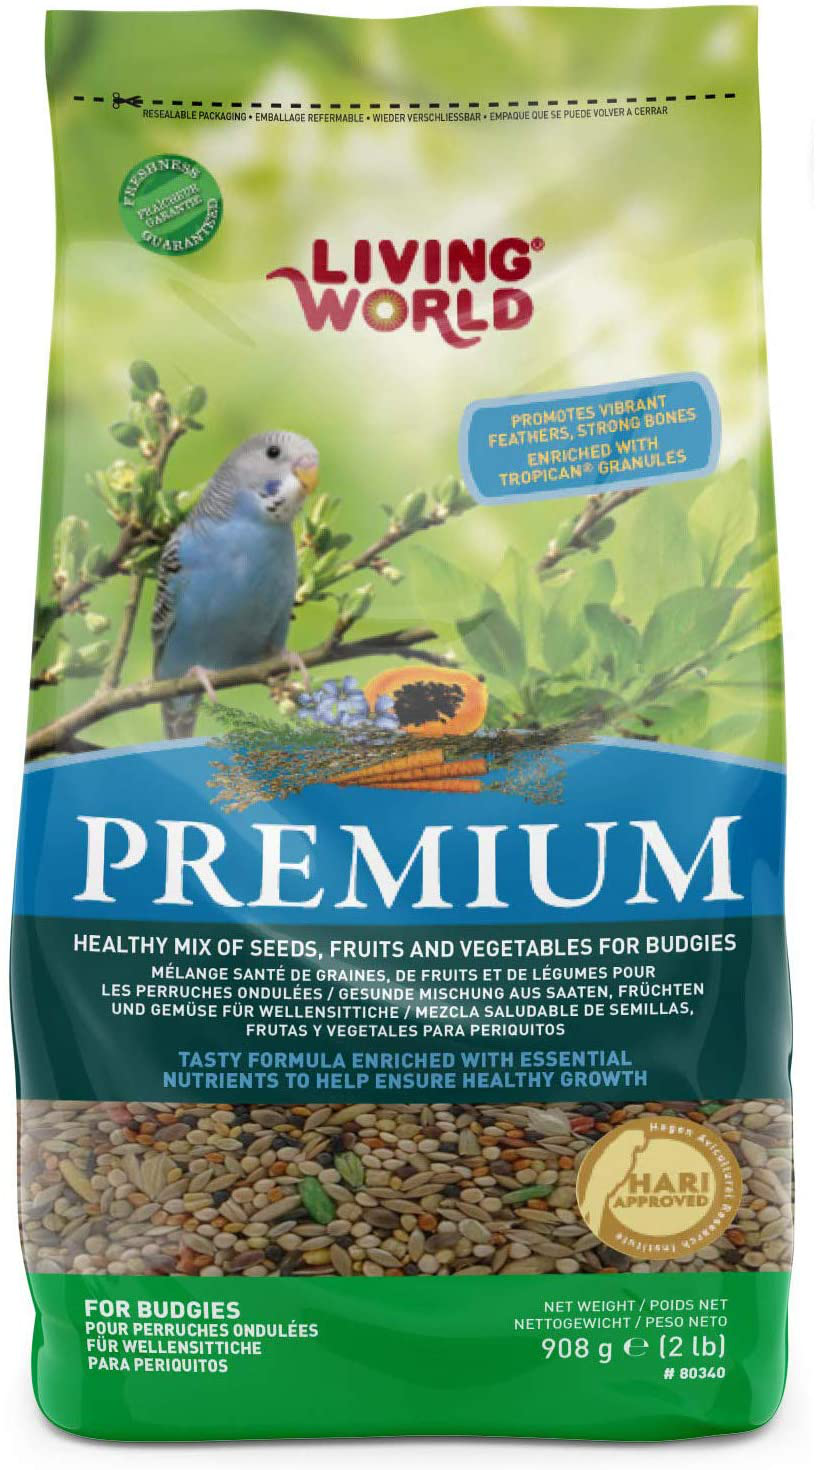 Living World Premium Parakeet/Budgie Mix, 2 Pounds